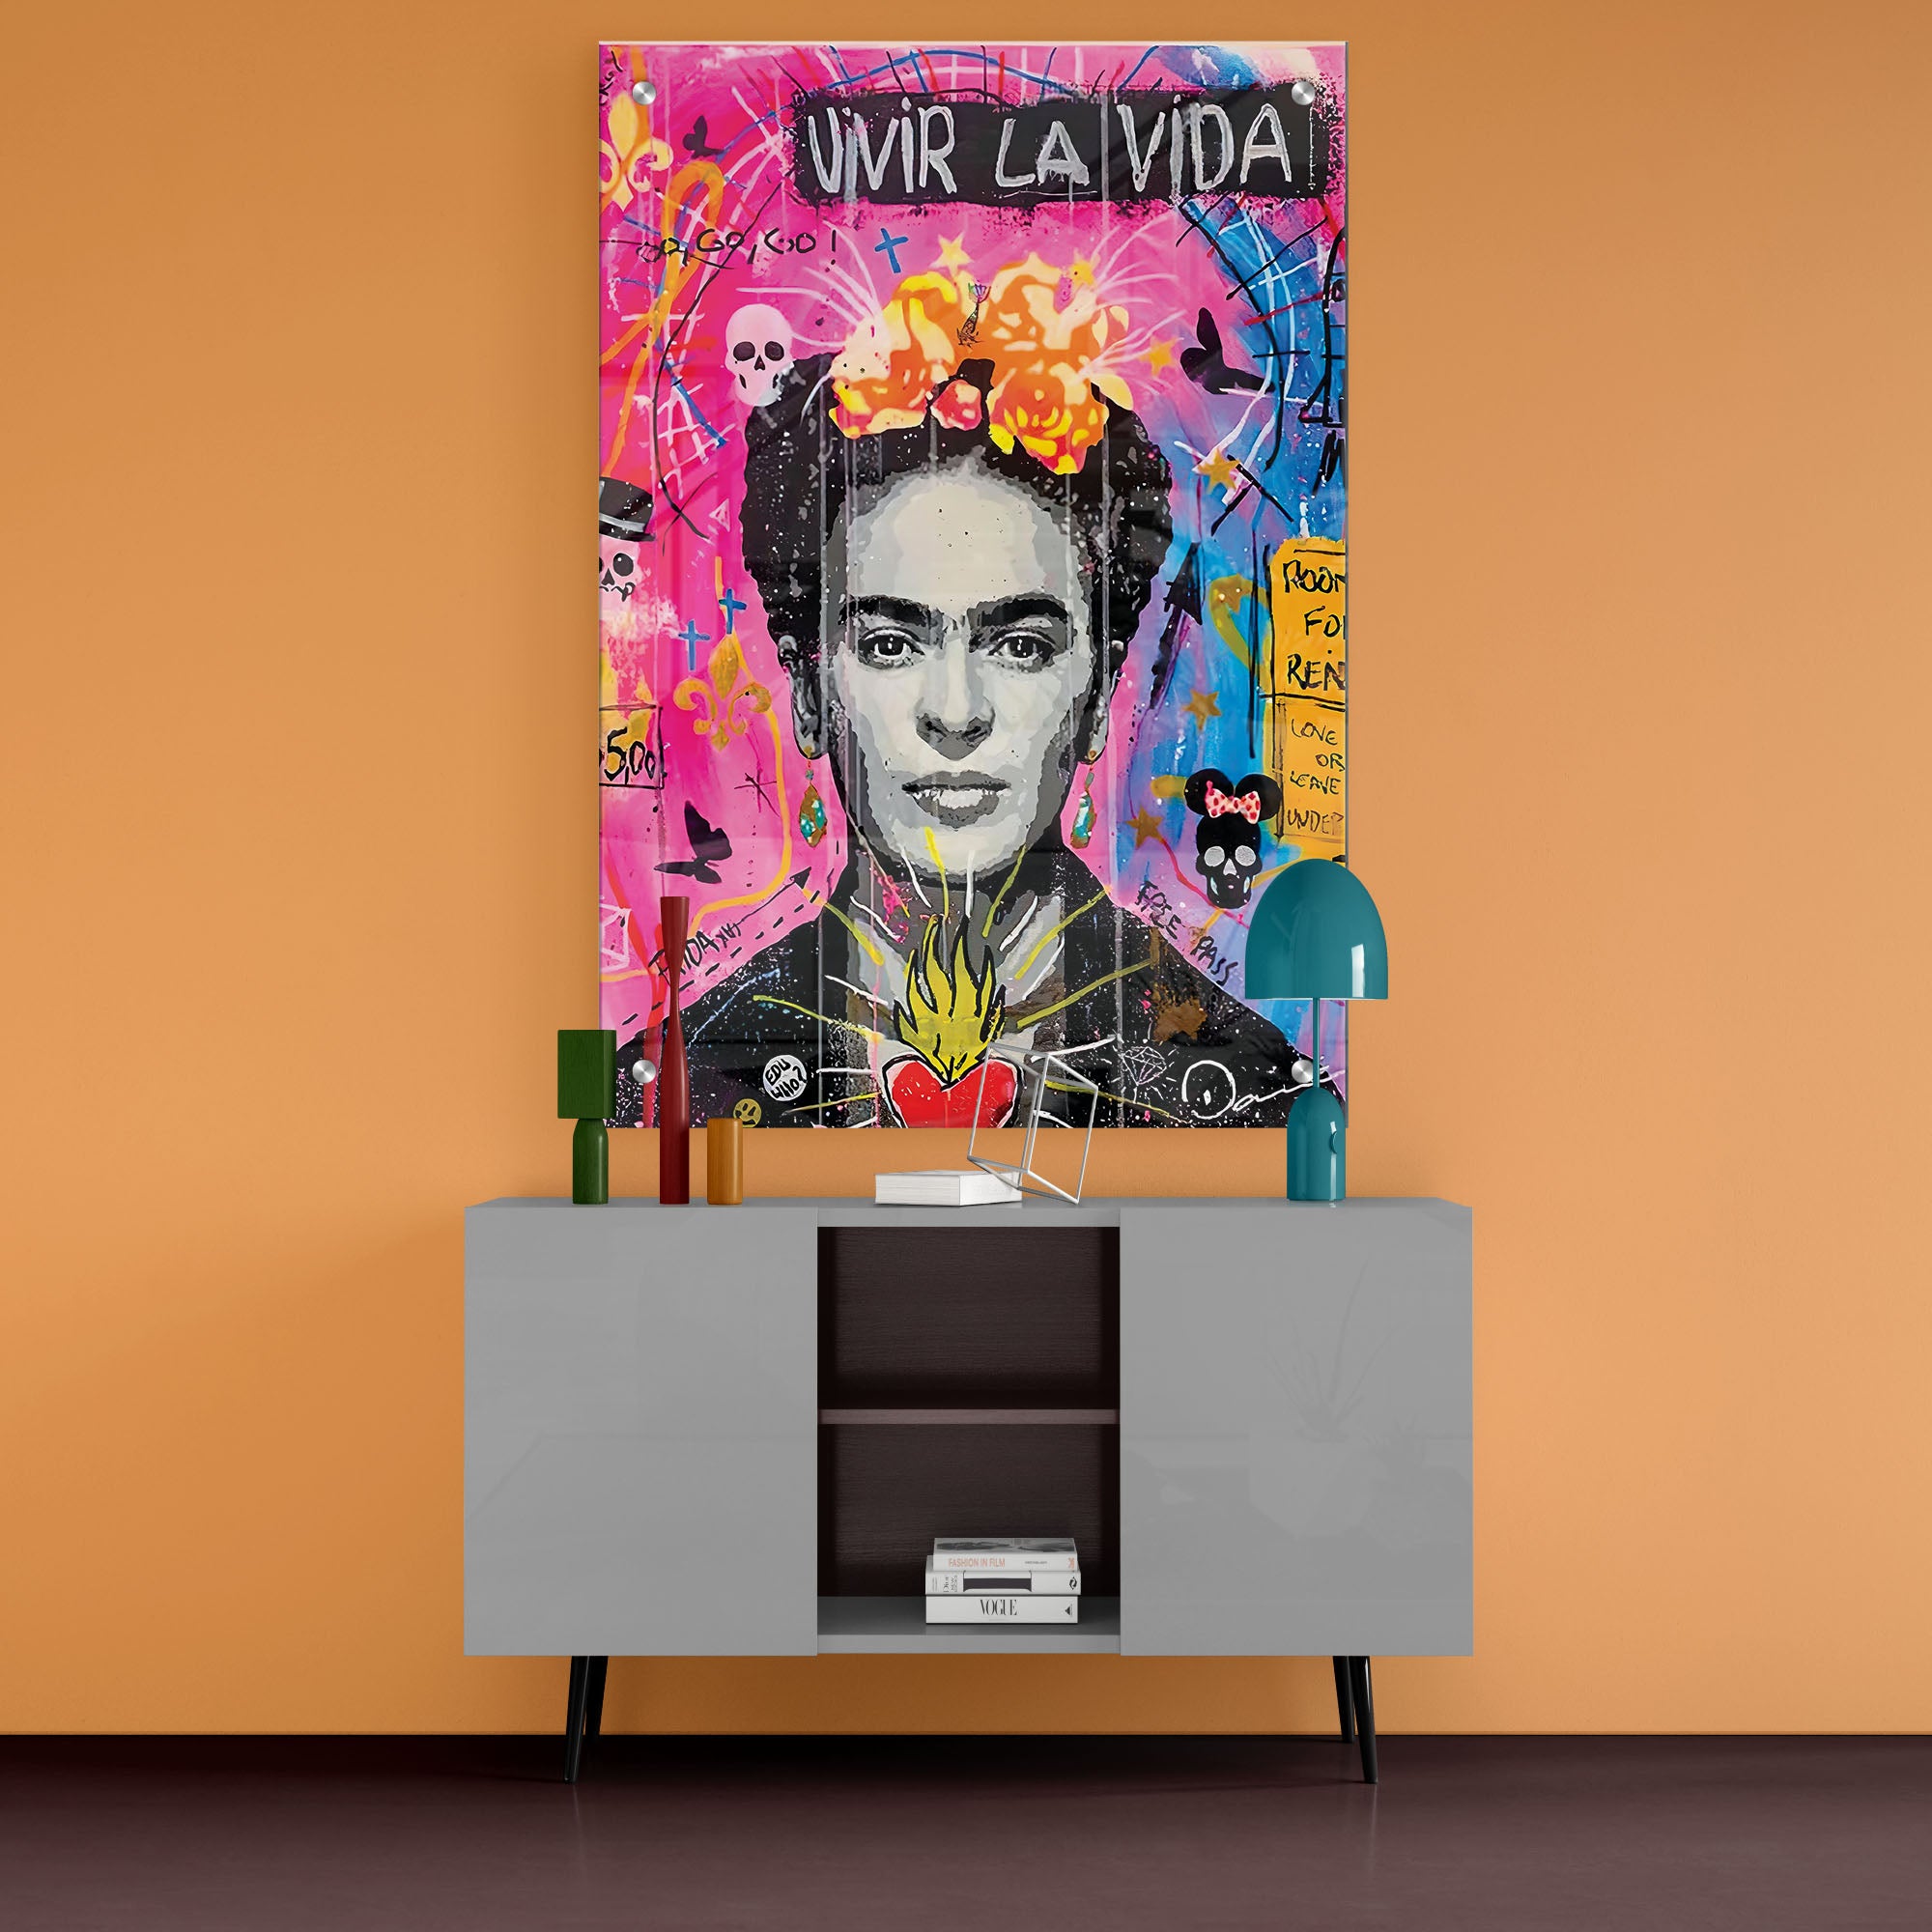 Vivir La Vida Frida Kahlo Acrylic Wall Painting